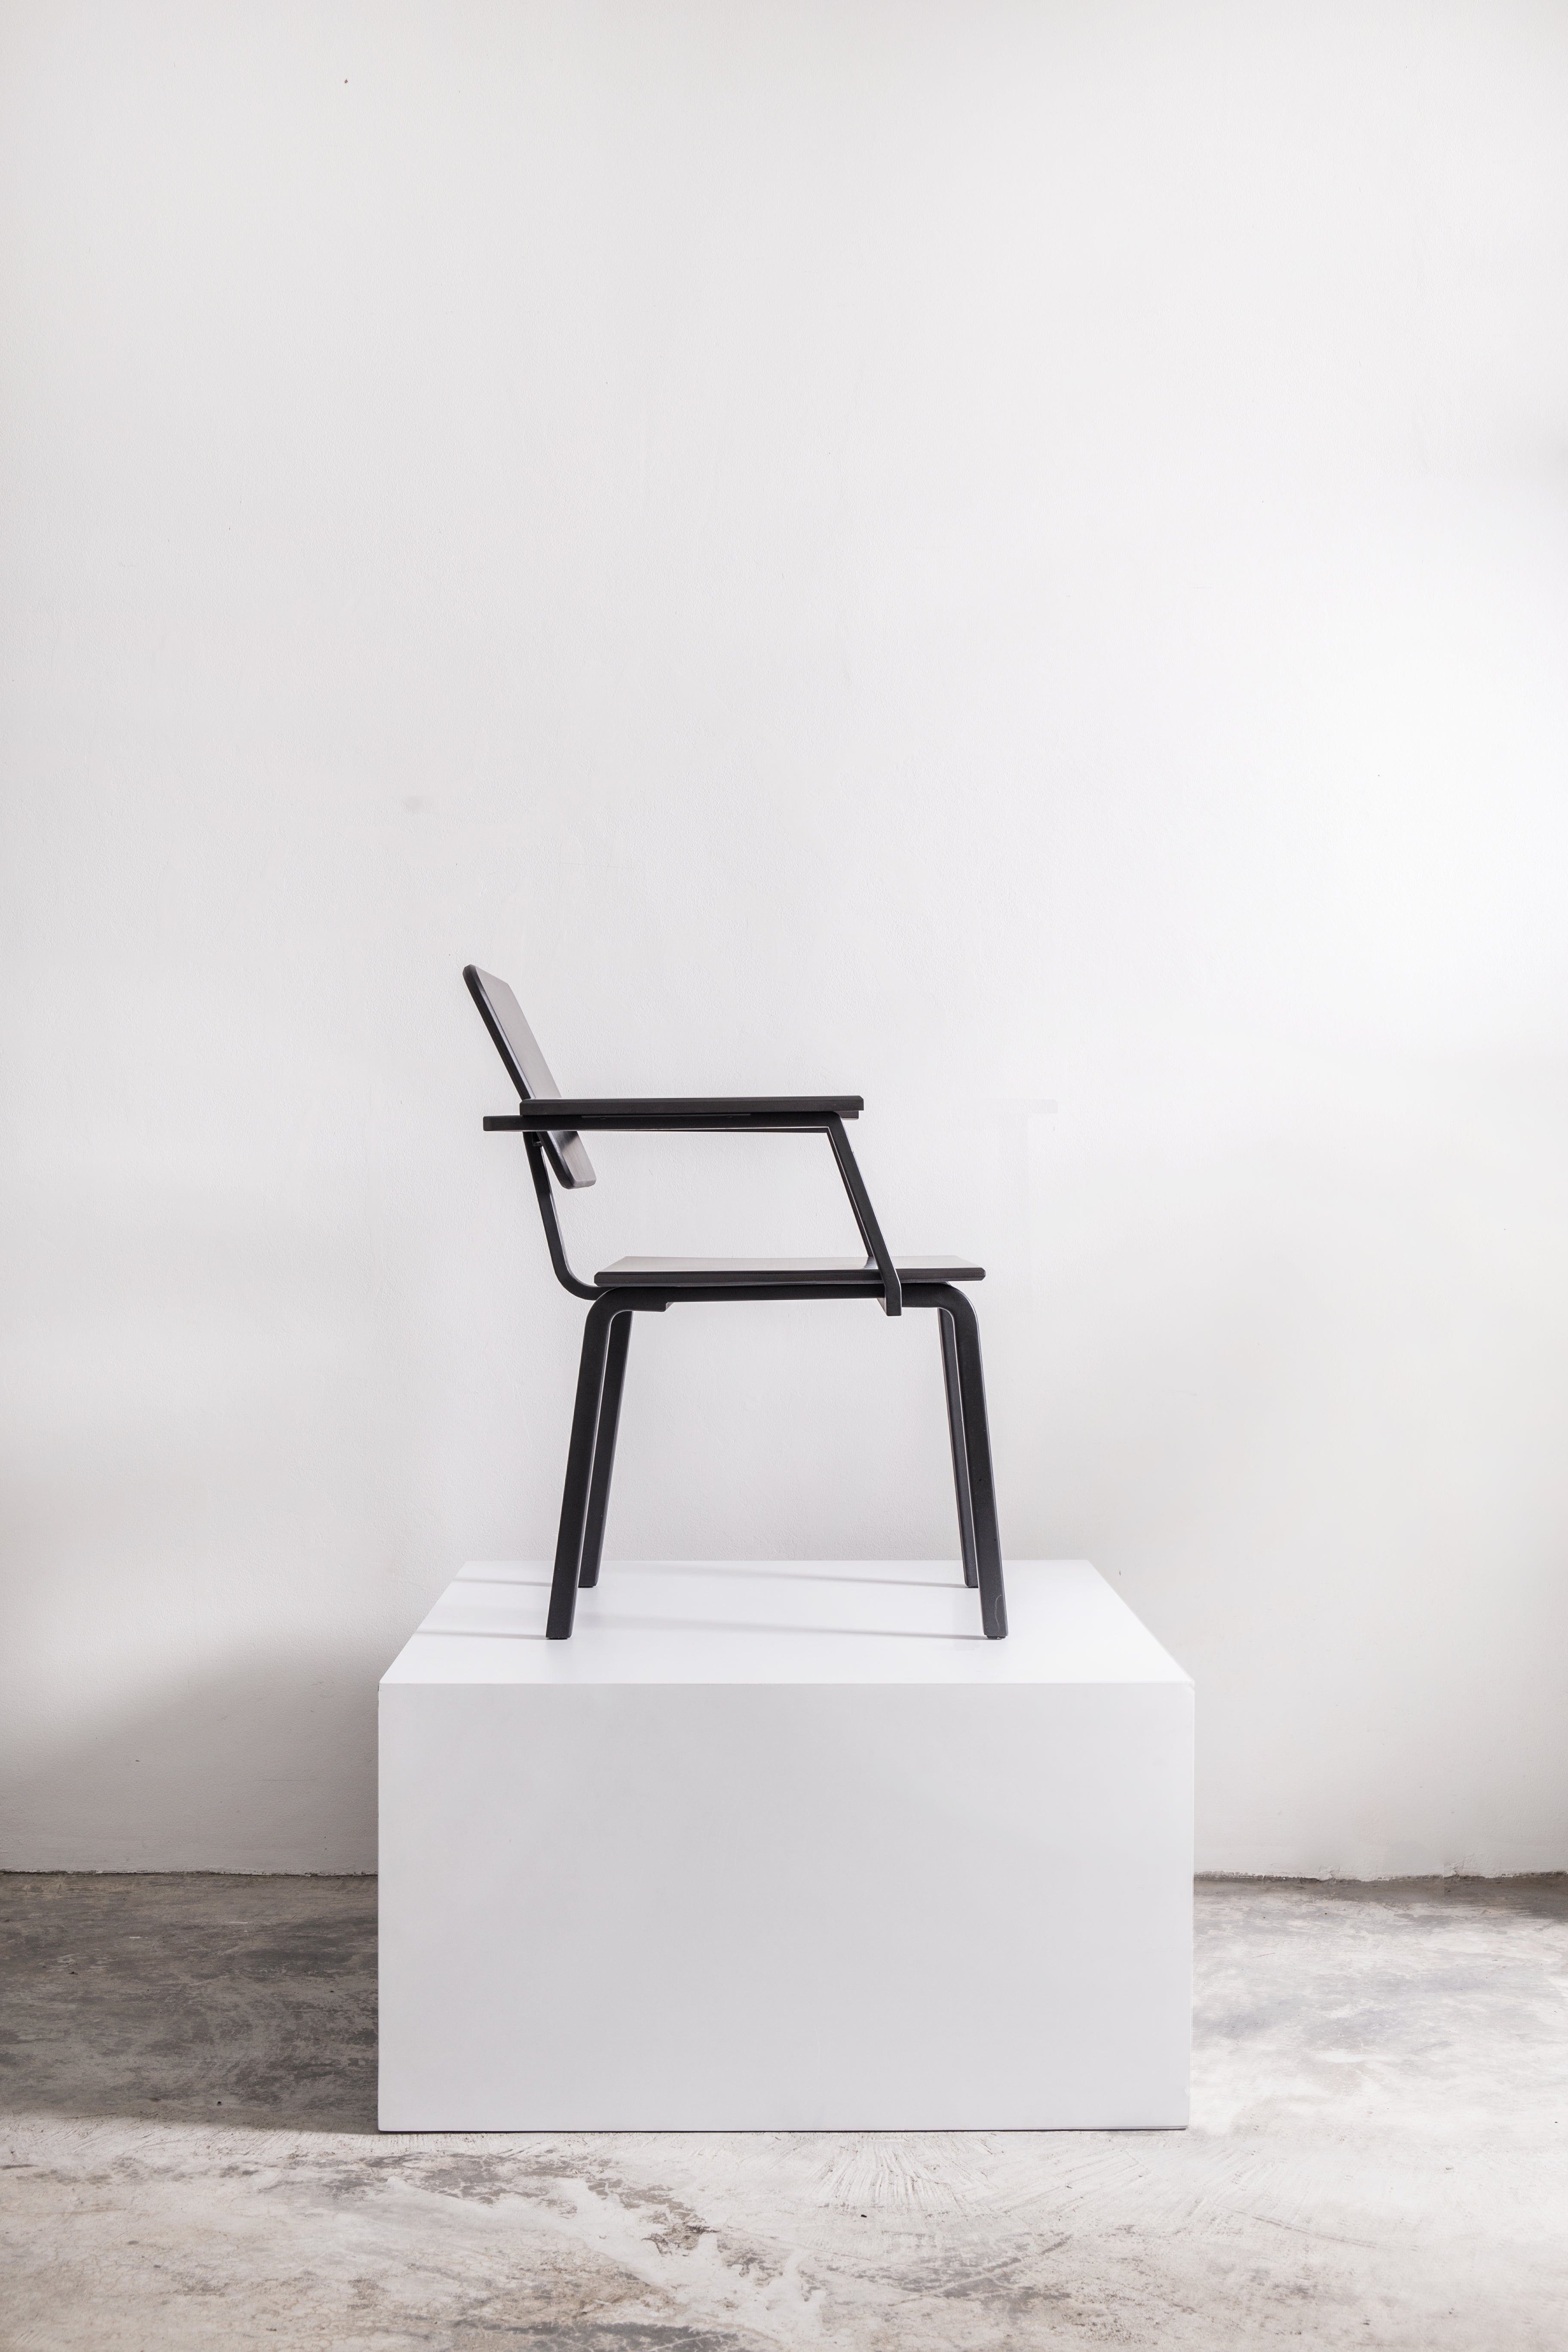 NICOFURNITURE - Chair - ZENO (OAK) - nicofurniture